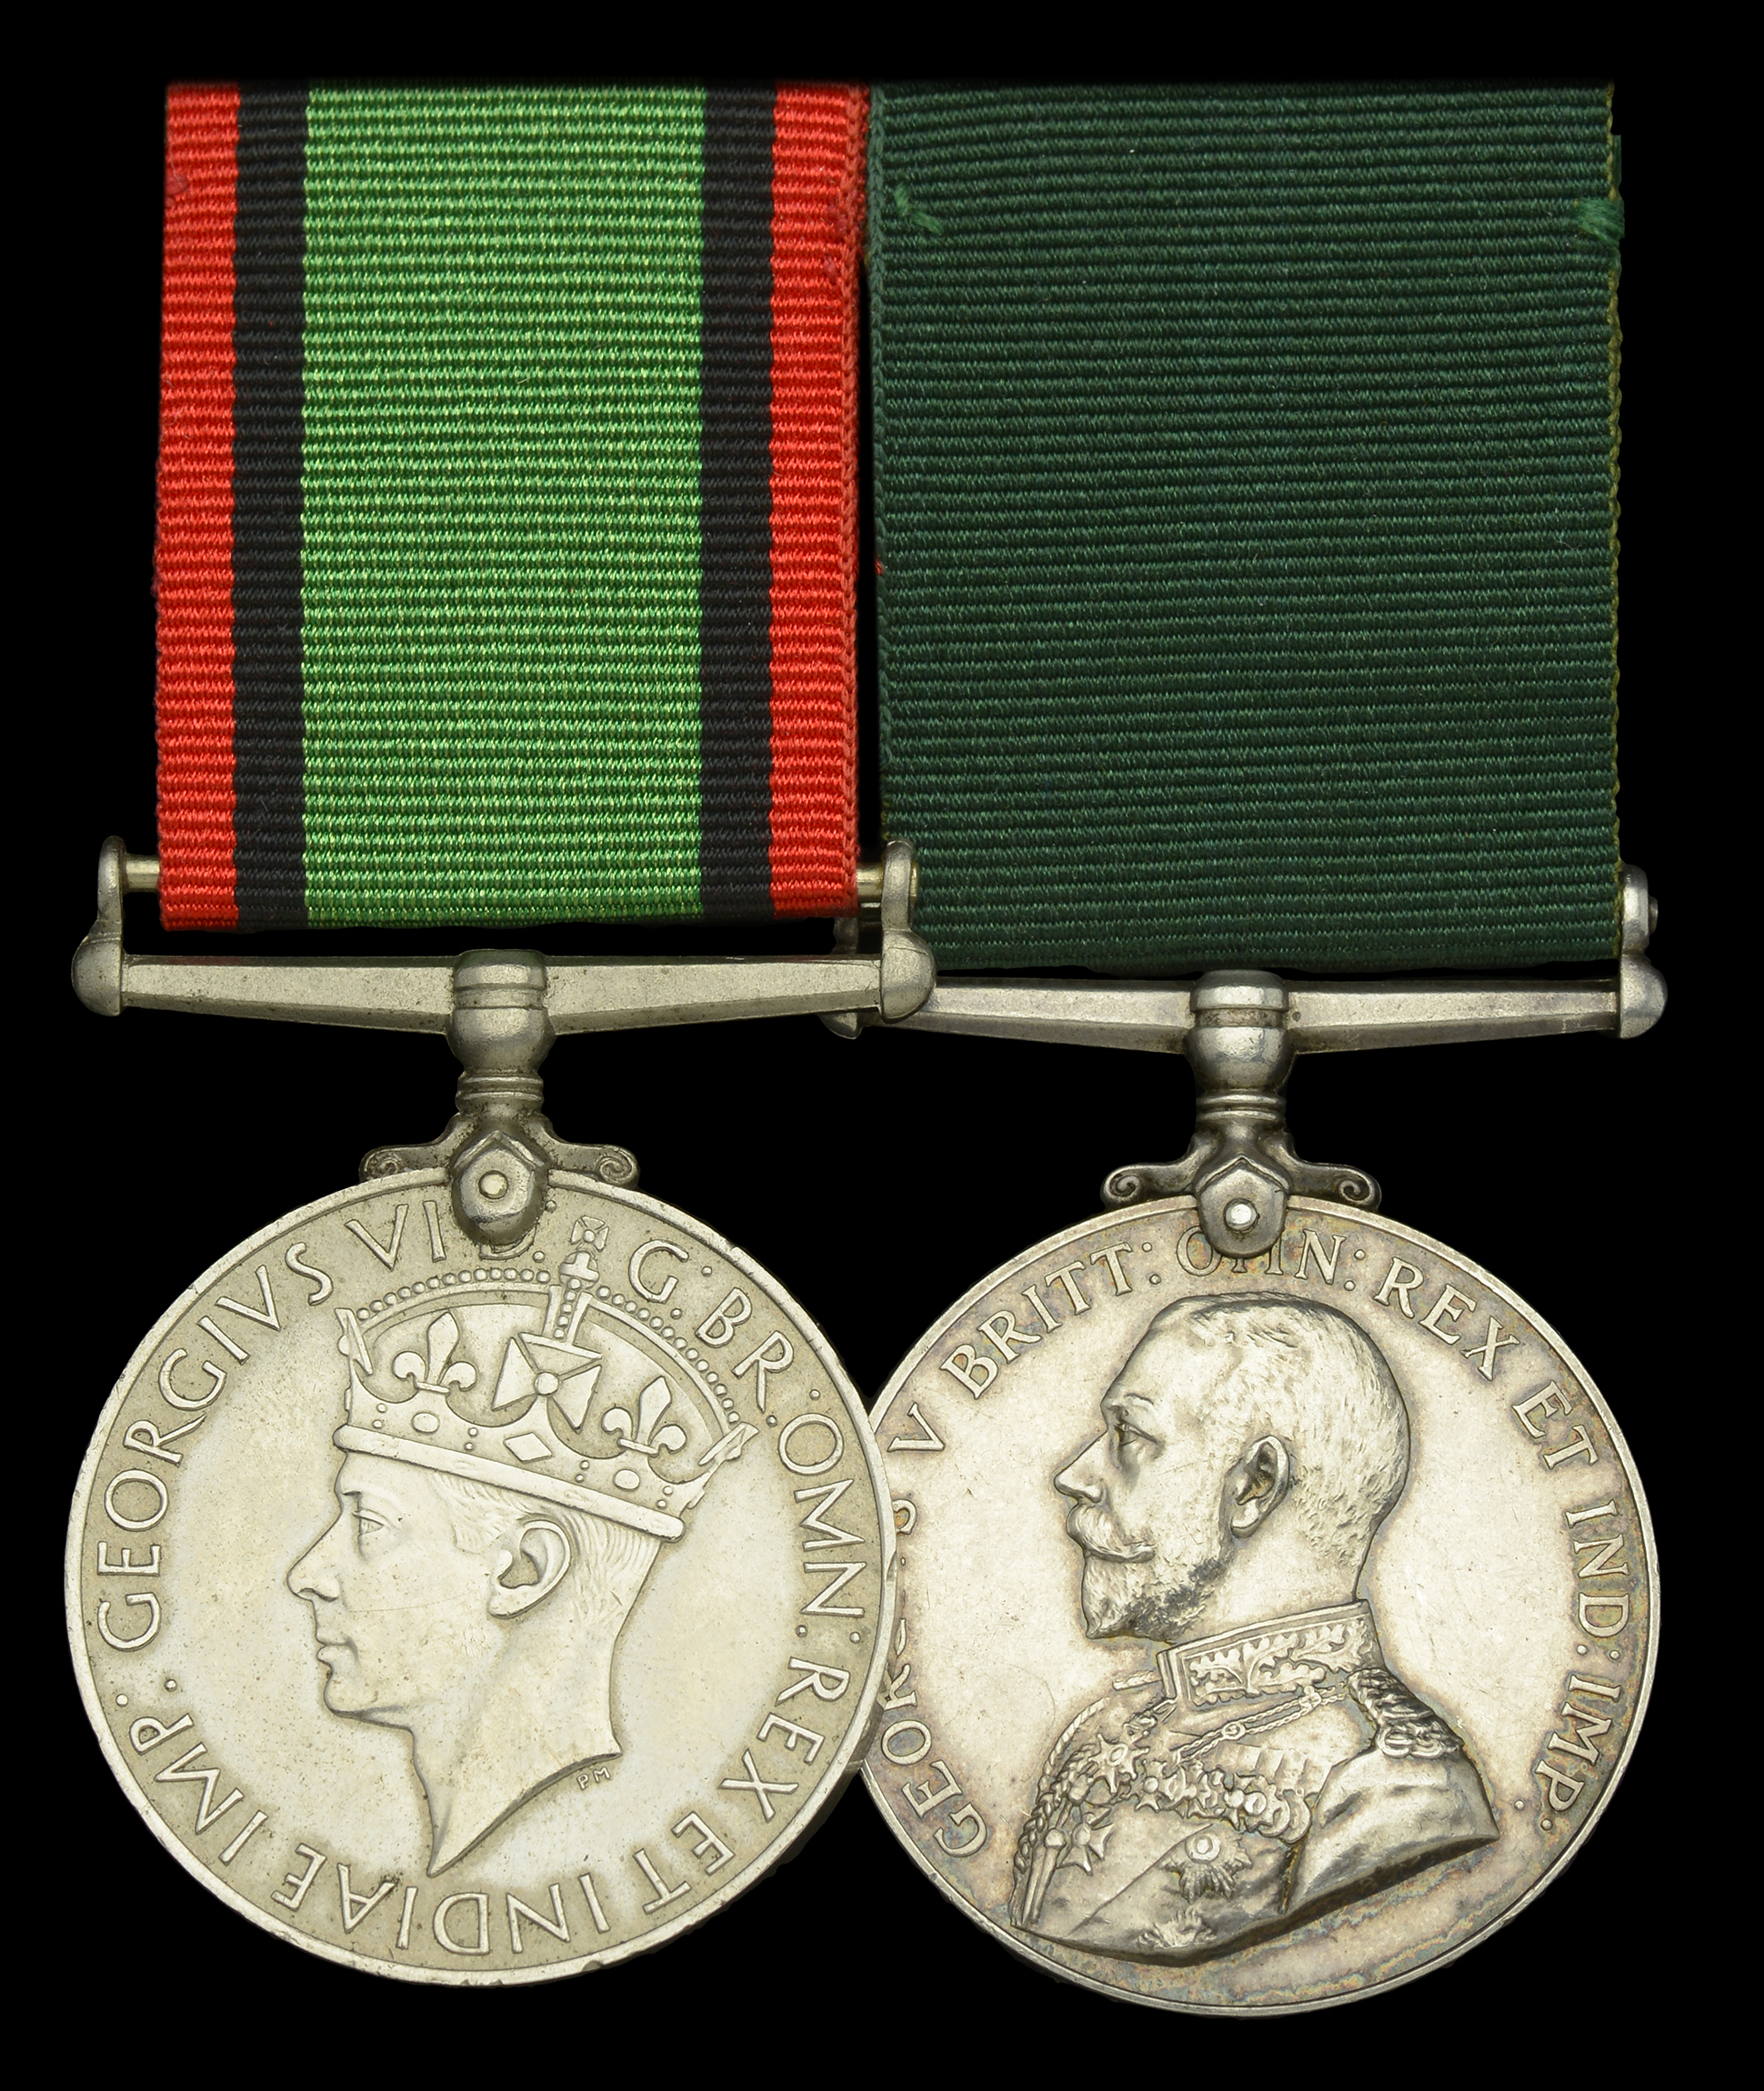 Pair: Rifleman Thomas H. Cooke, Southern Rhodesia Volunteers Southern Rhodesia Service Me...